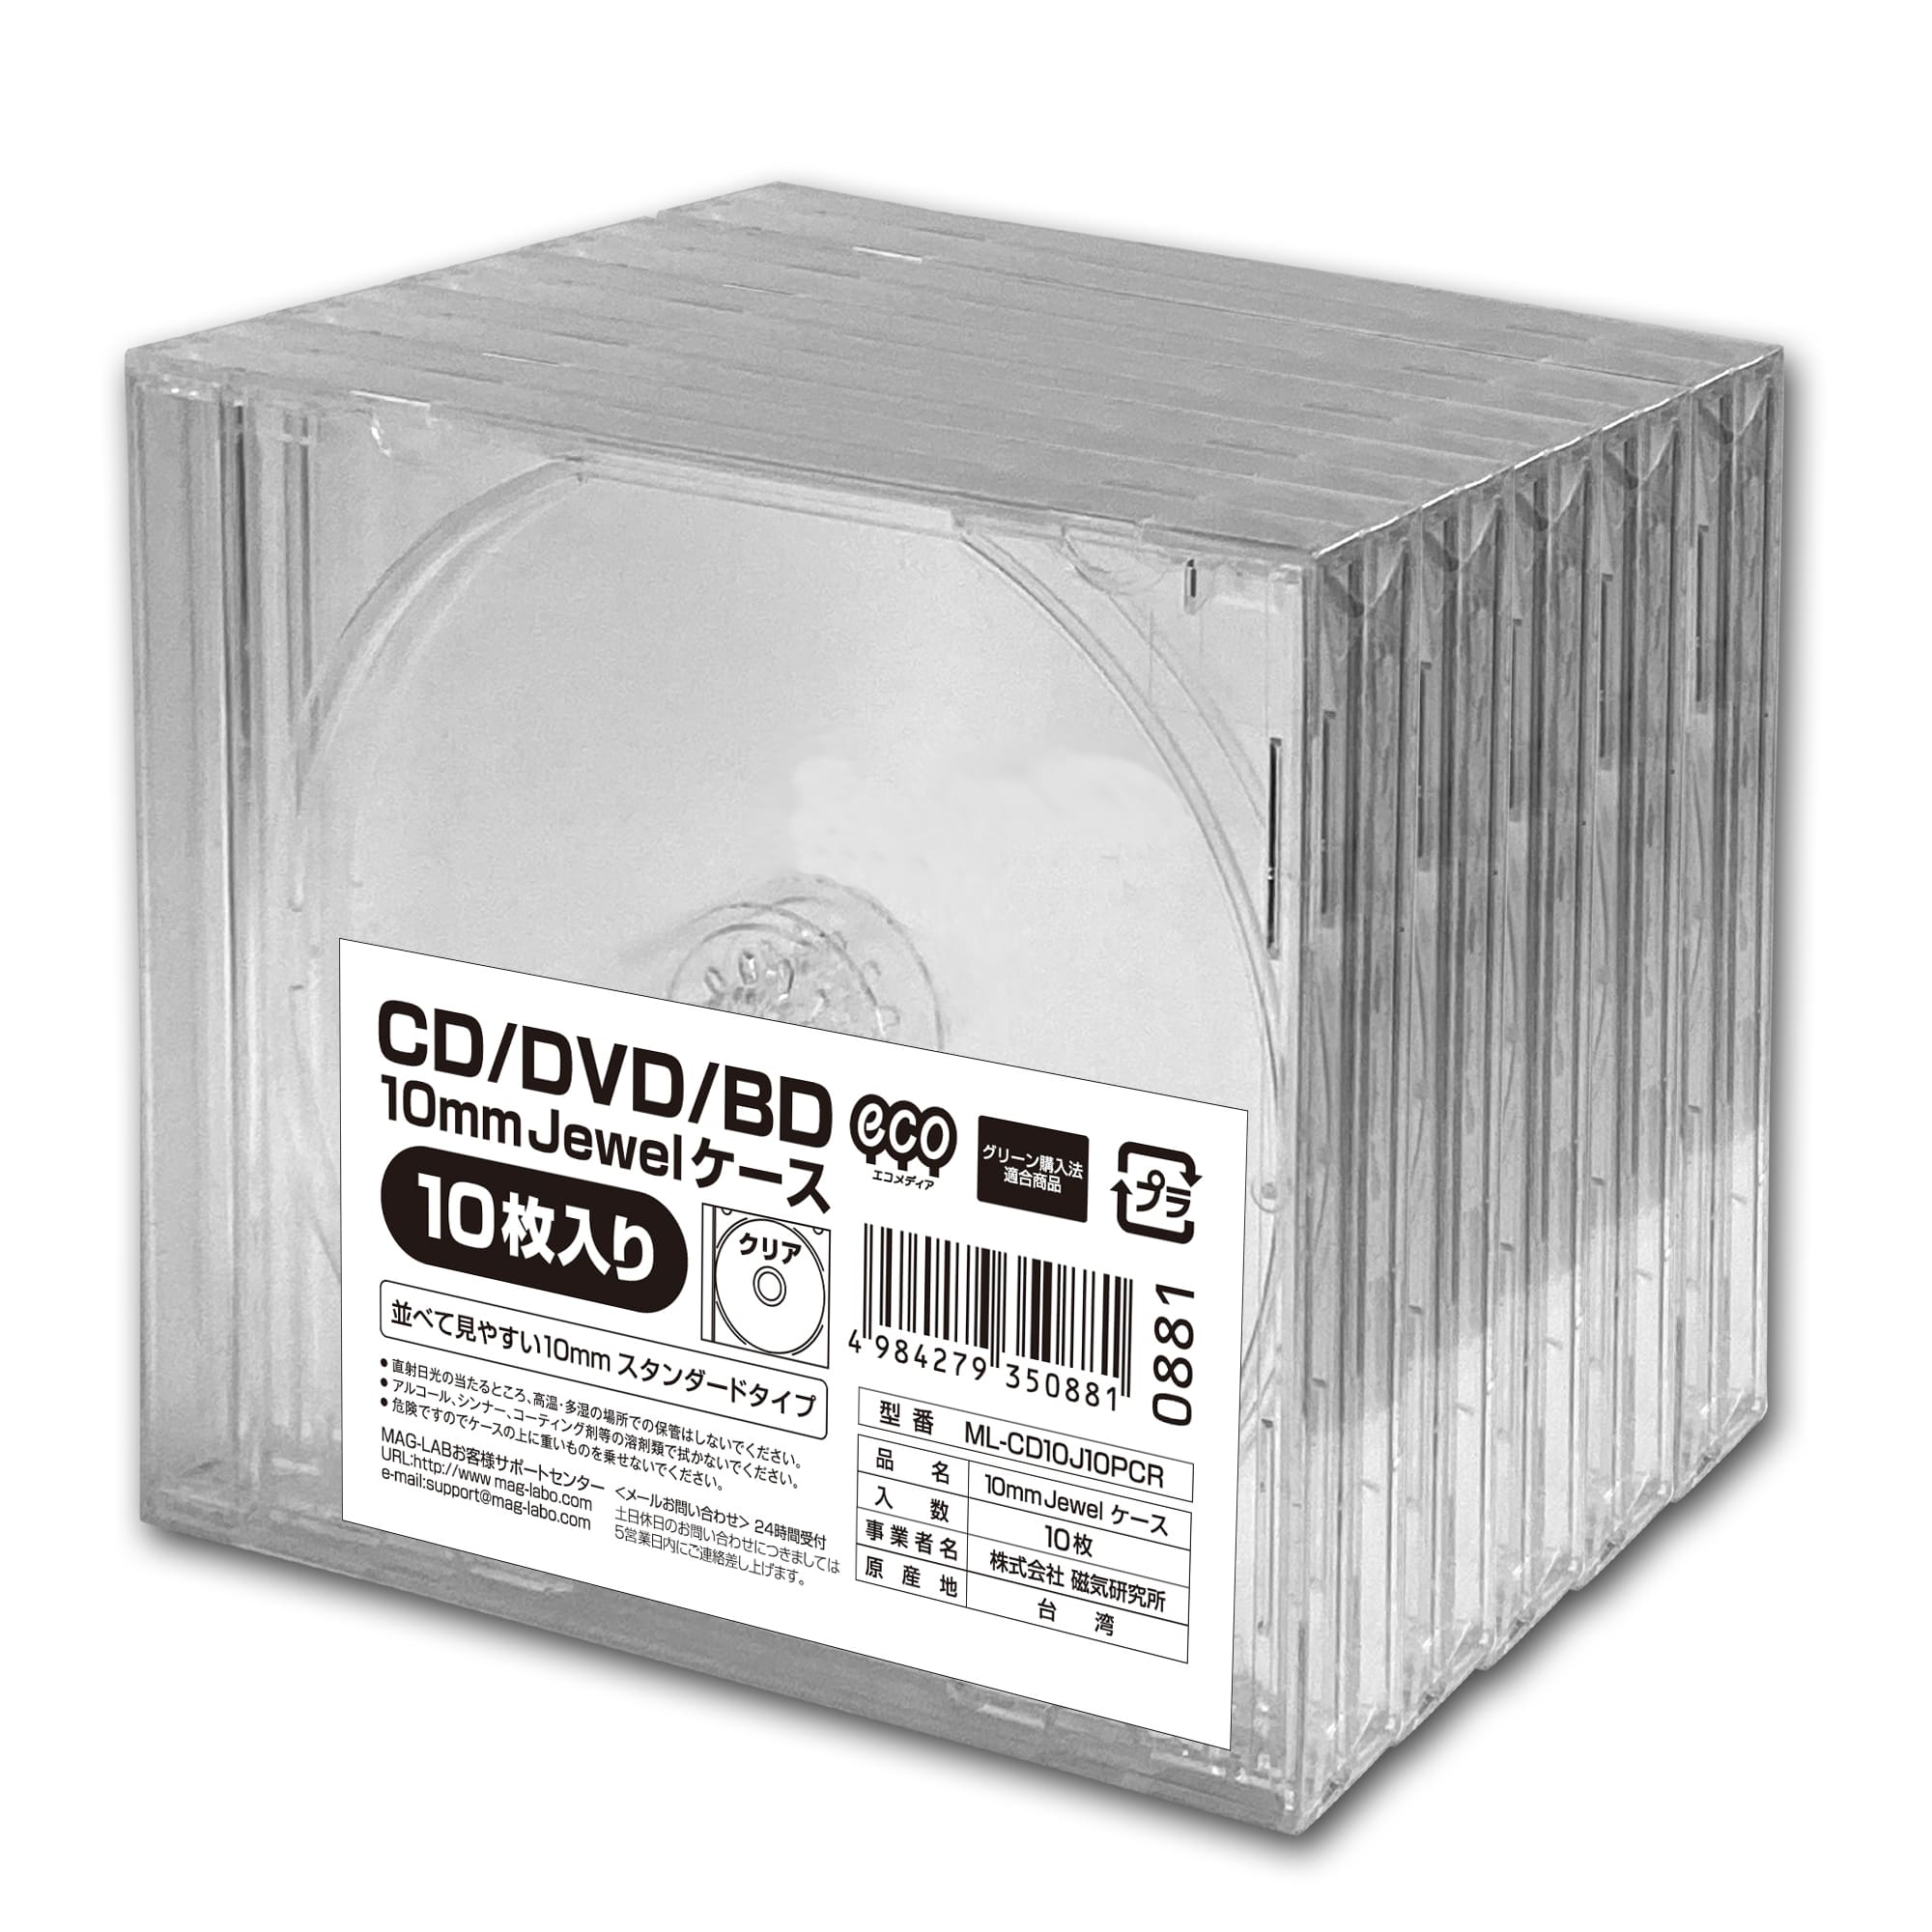 CD DVD BD 1[ 10mmWGP[X 10